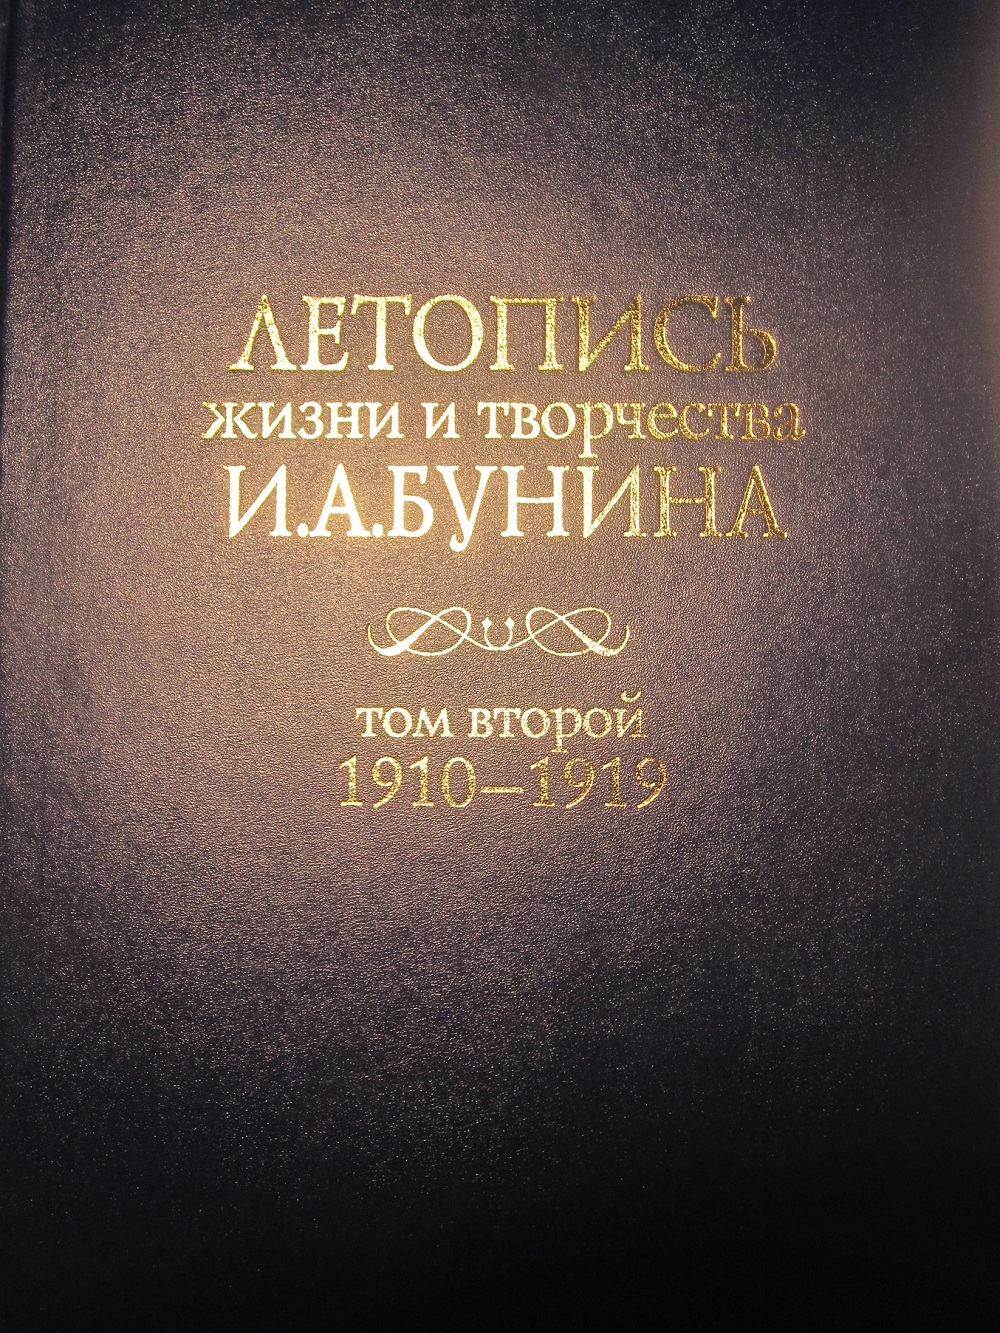 Обложка Летопись жизни и творчества И.А.Бунина. Том 2 (1910-1919) 